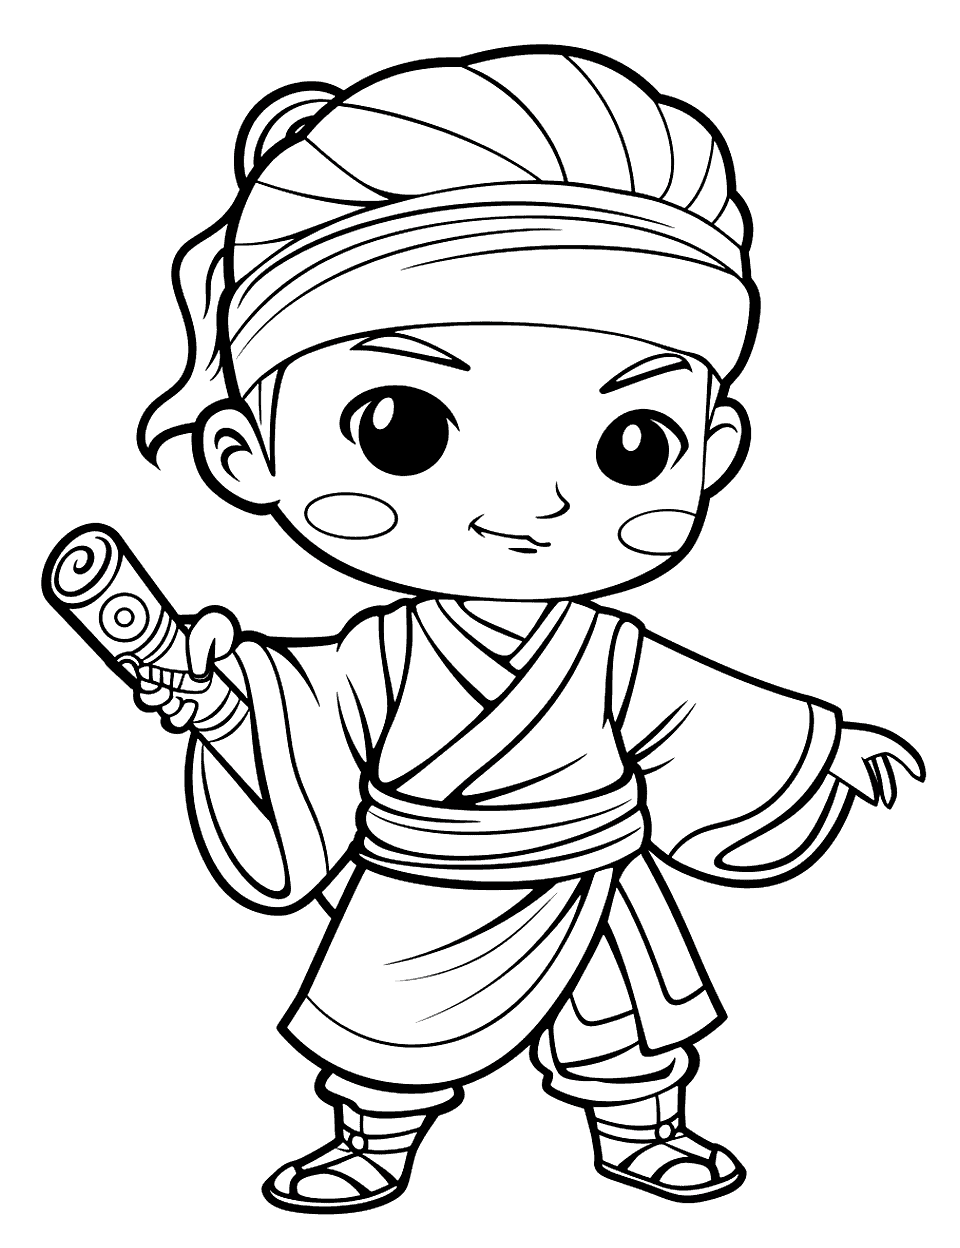 Chibi Sensei Wisdom Ninja Coloring Page - A cute, chibi-style sensei sharing wisdom, with a scroll in hand.